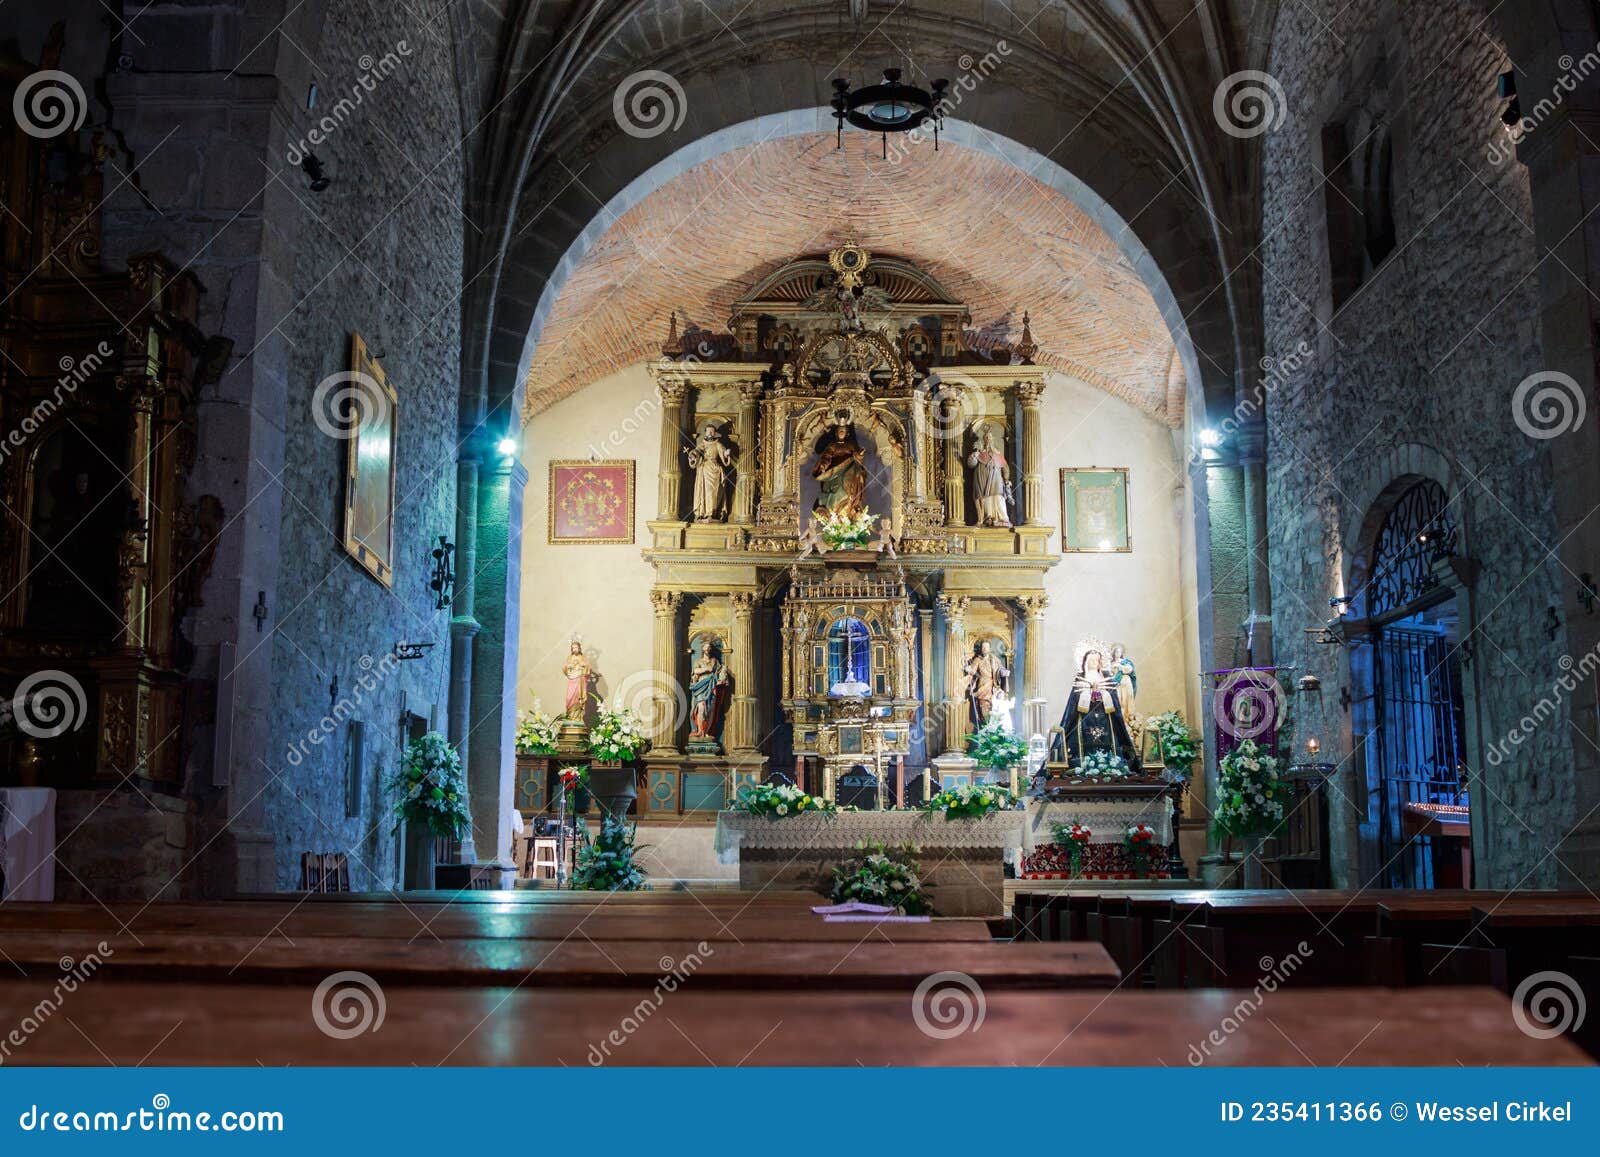 interior of parish church of our lady of the assumption, la alberca, salamanca, spain